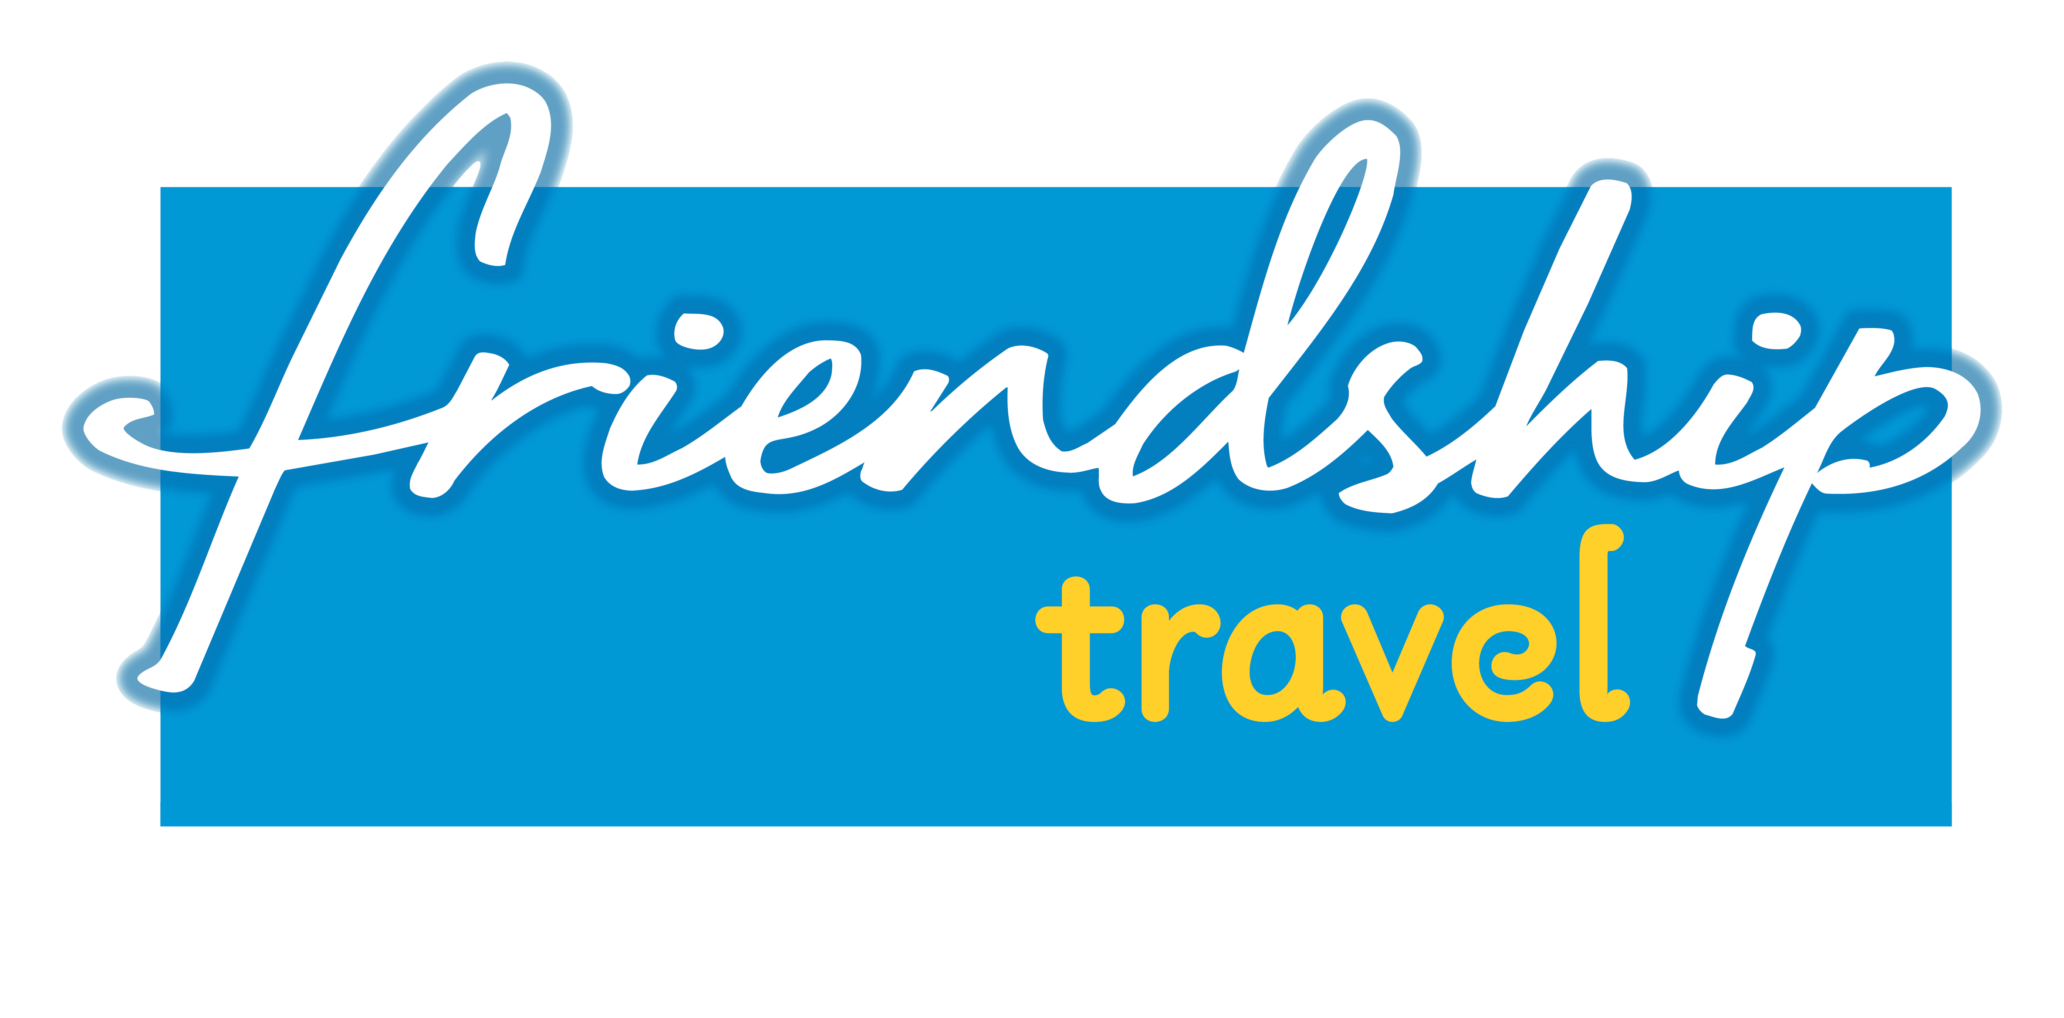 Friendship Travel | Single Holidays